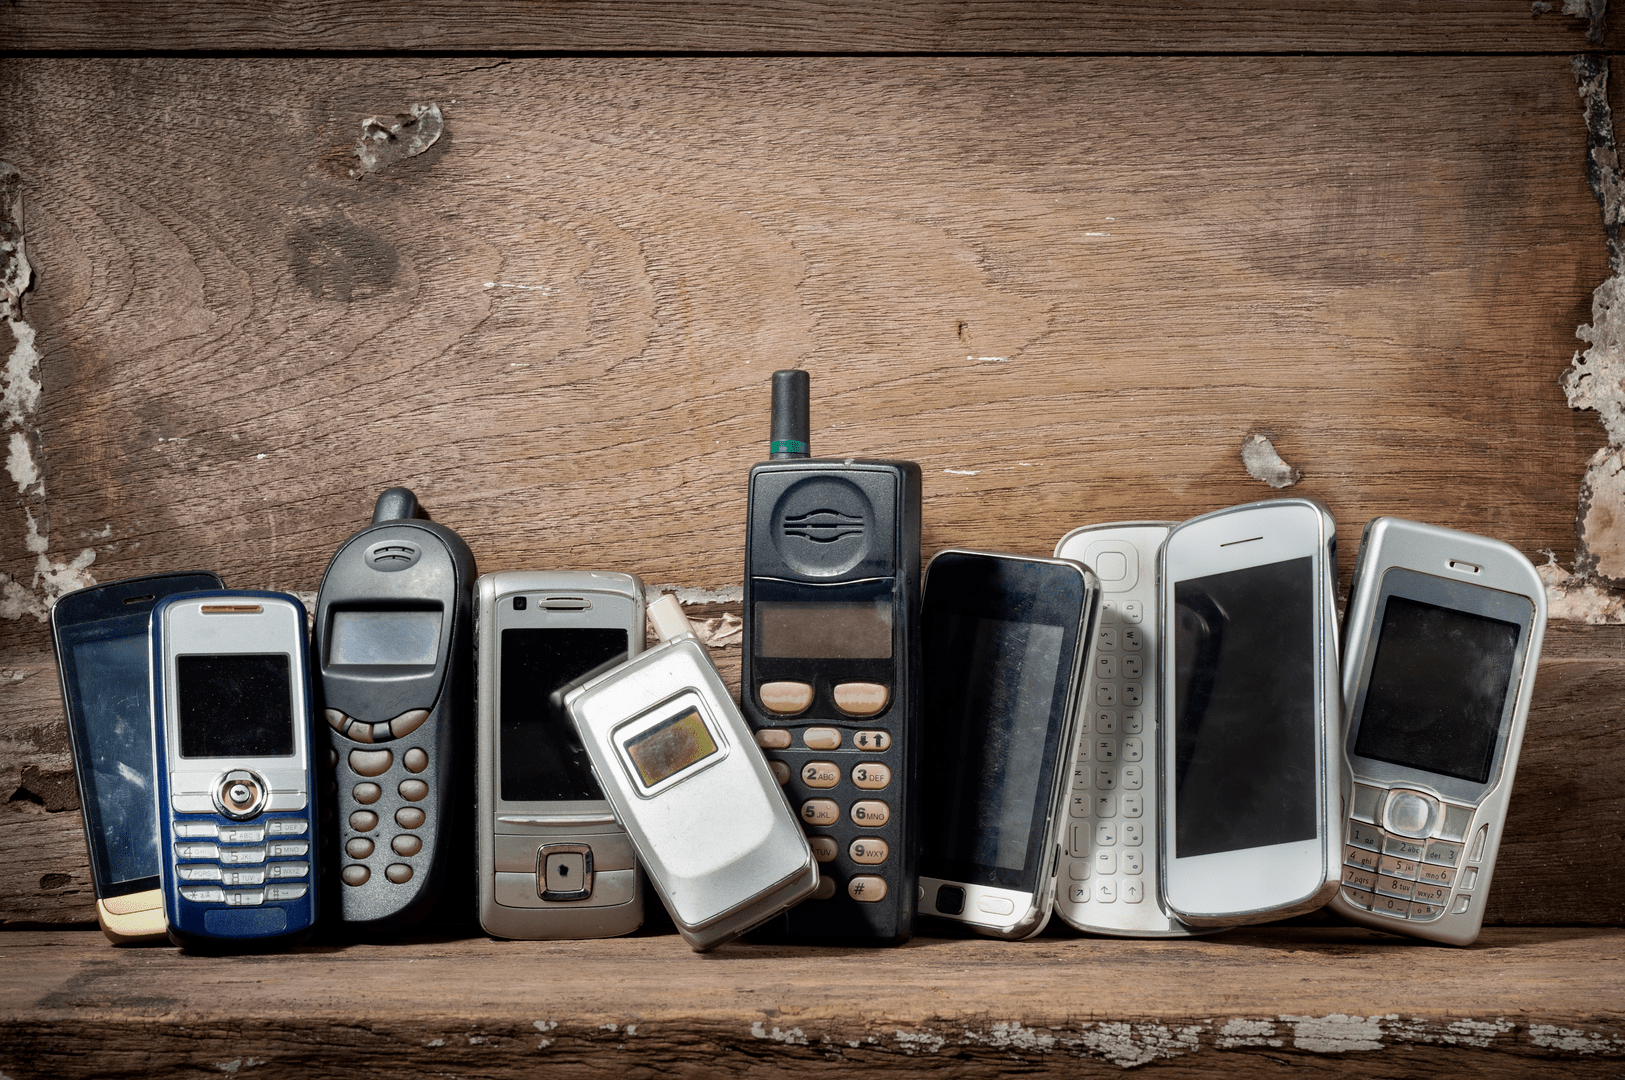 The Mobile Phone Evolution